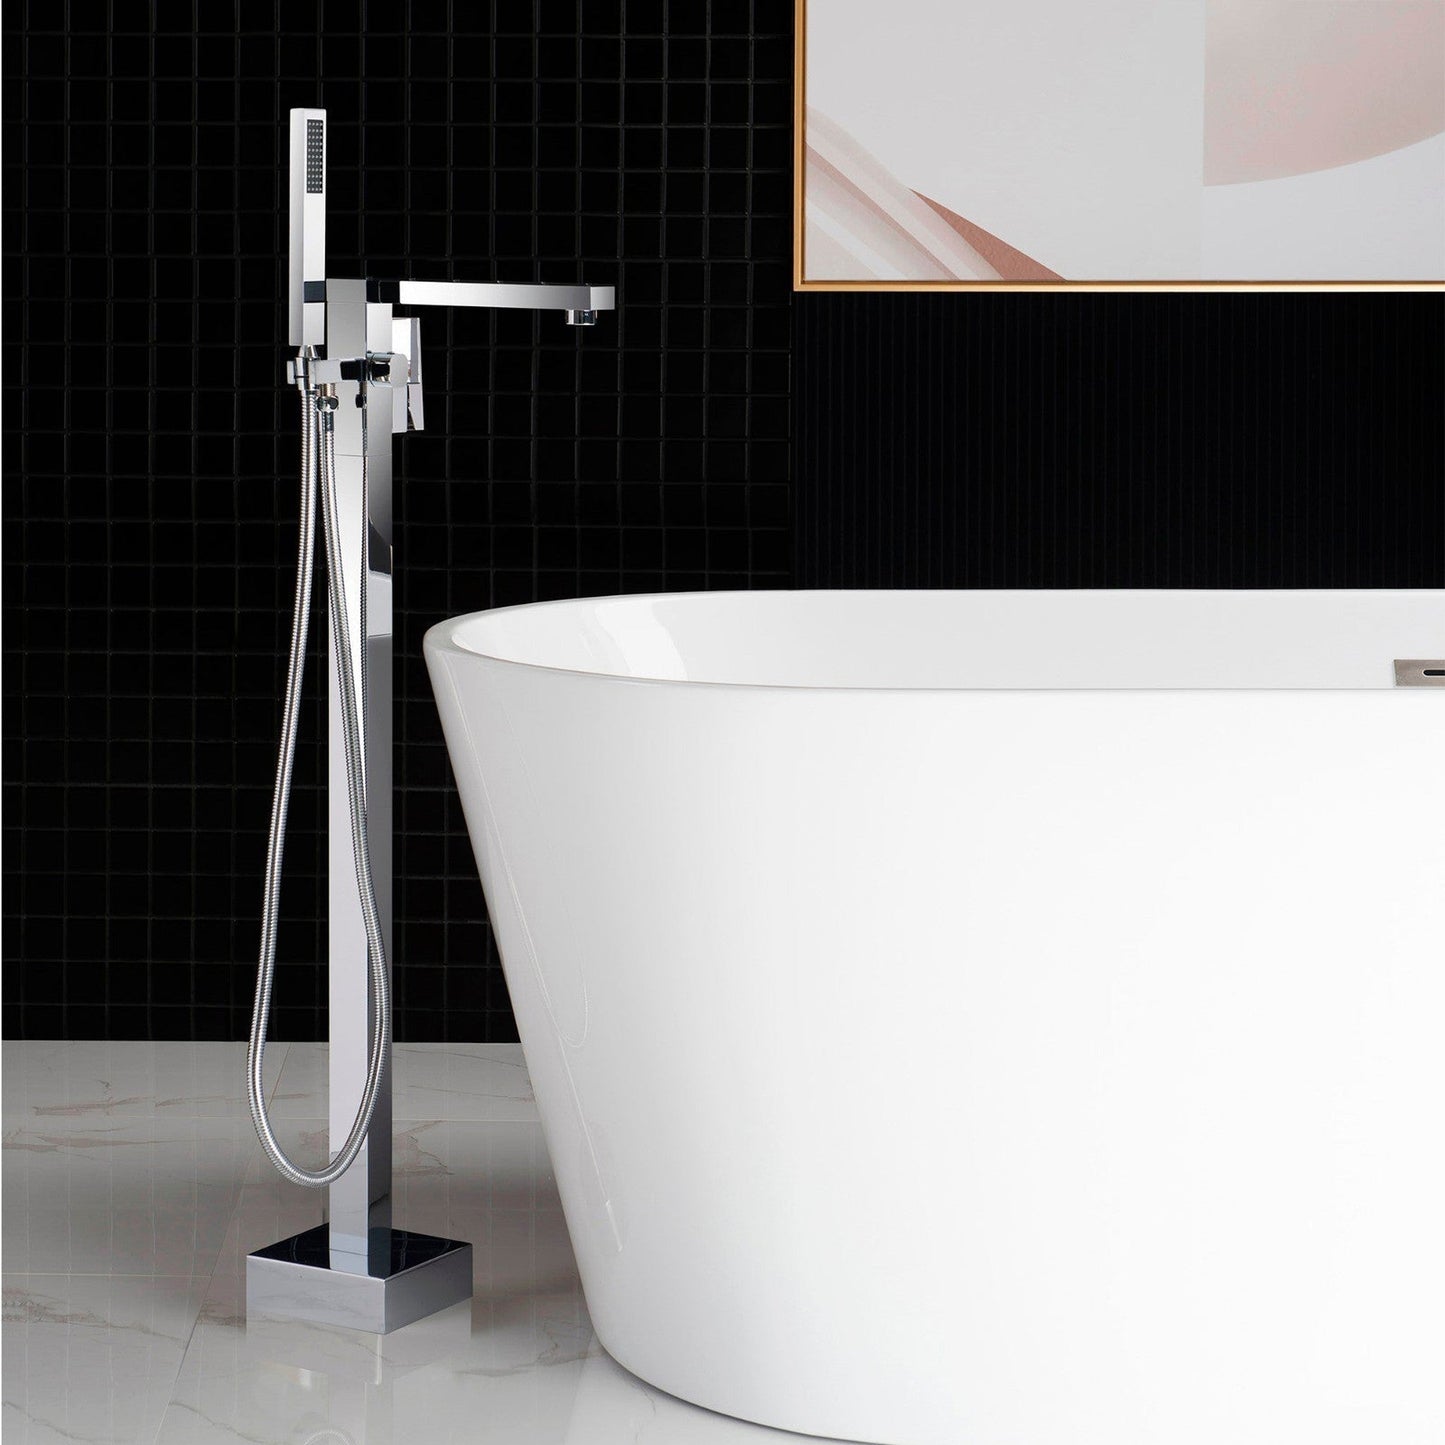 WoodBridge B1702 54" White Acrylic Freestanding Soaking Bathtub With Chrome Drain, Overflow, F-0004 Tub Filler and Caddy Tray